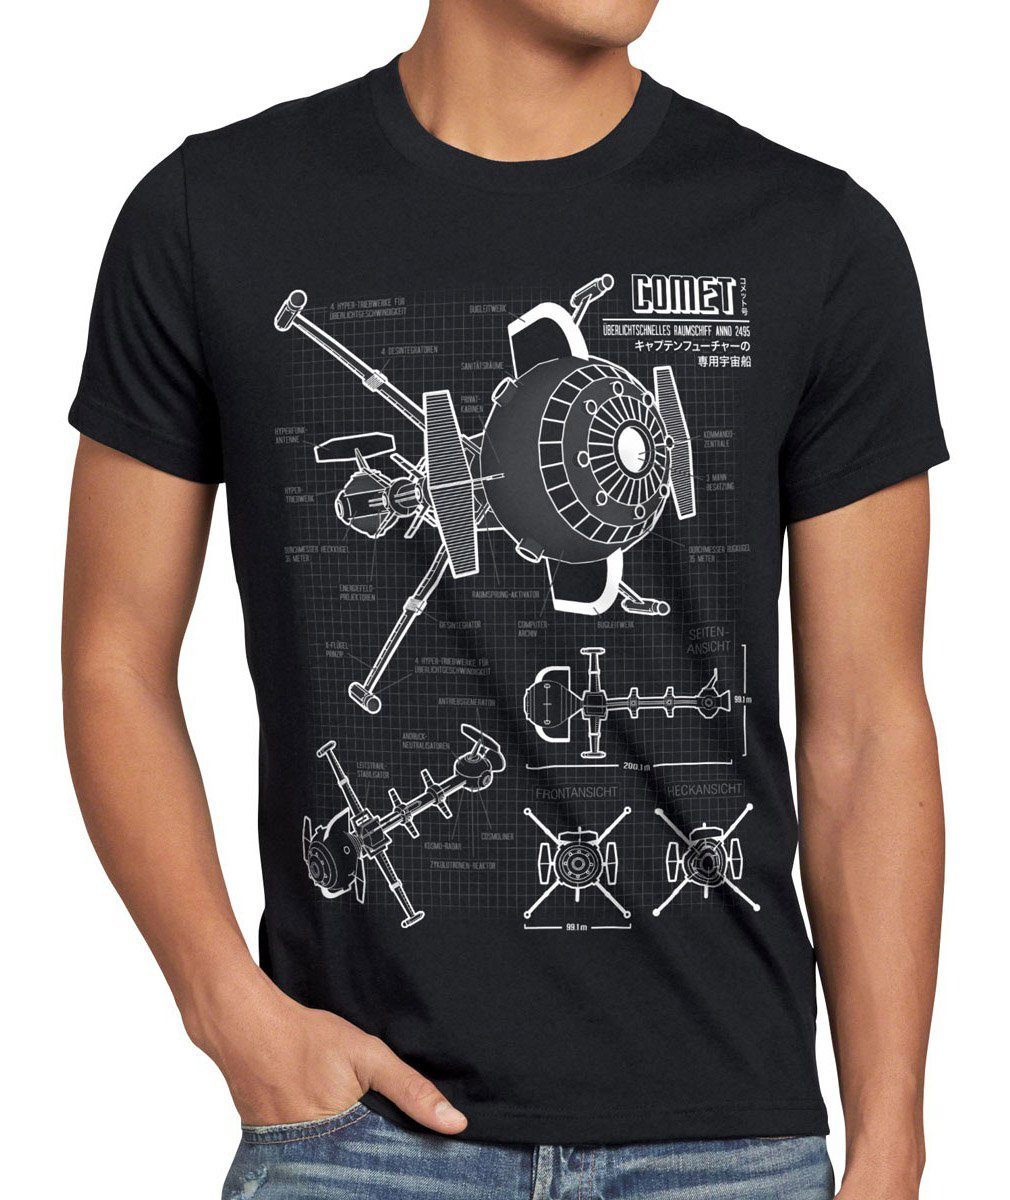 style3 Print-Shirt Herren T-Shirt Future Comet Captain Science Fiction Anime Comic Serie TV blu-ray schwarz